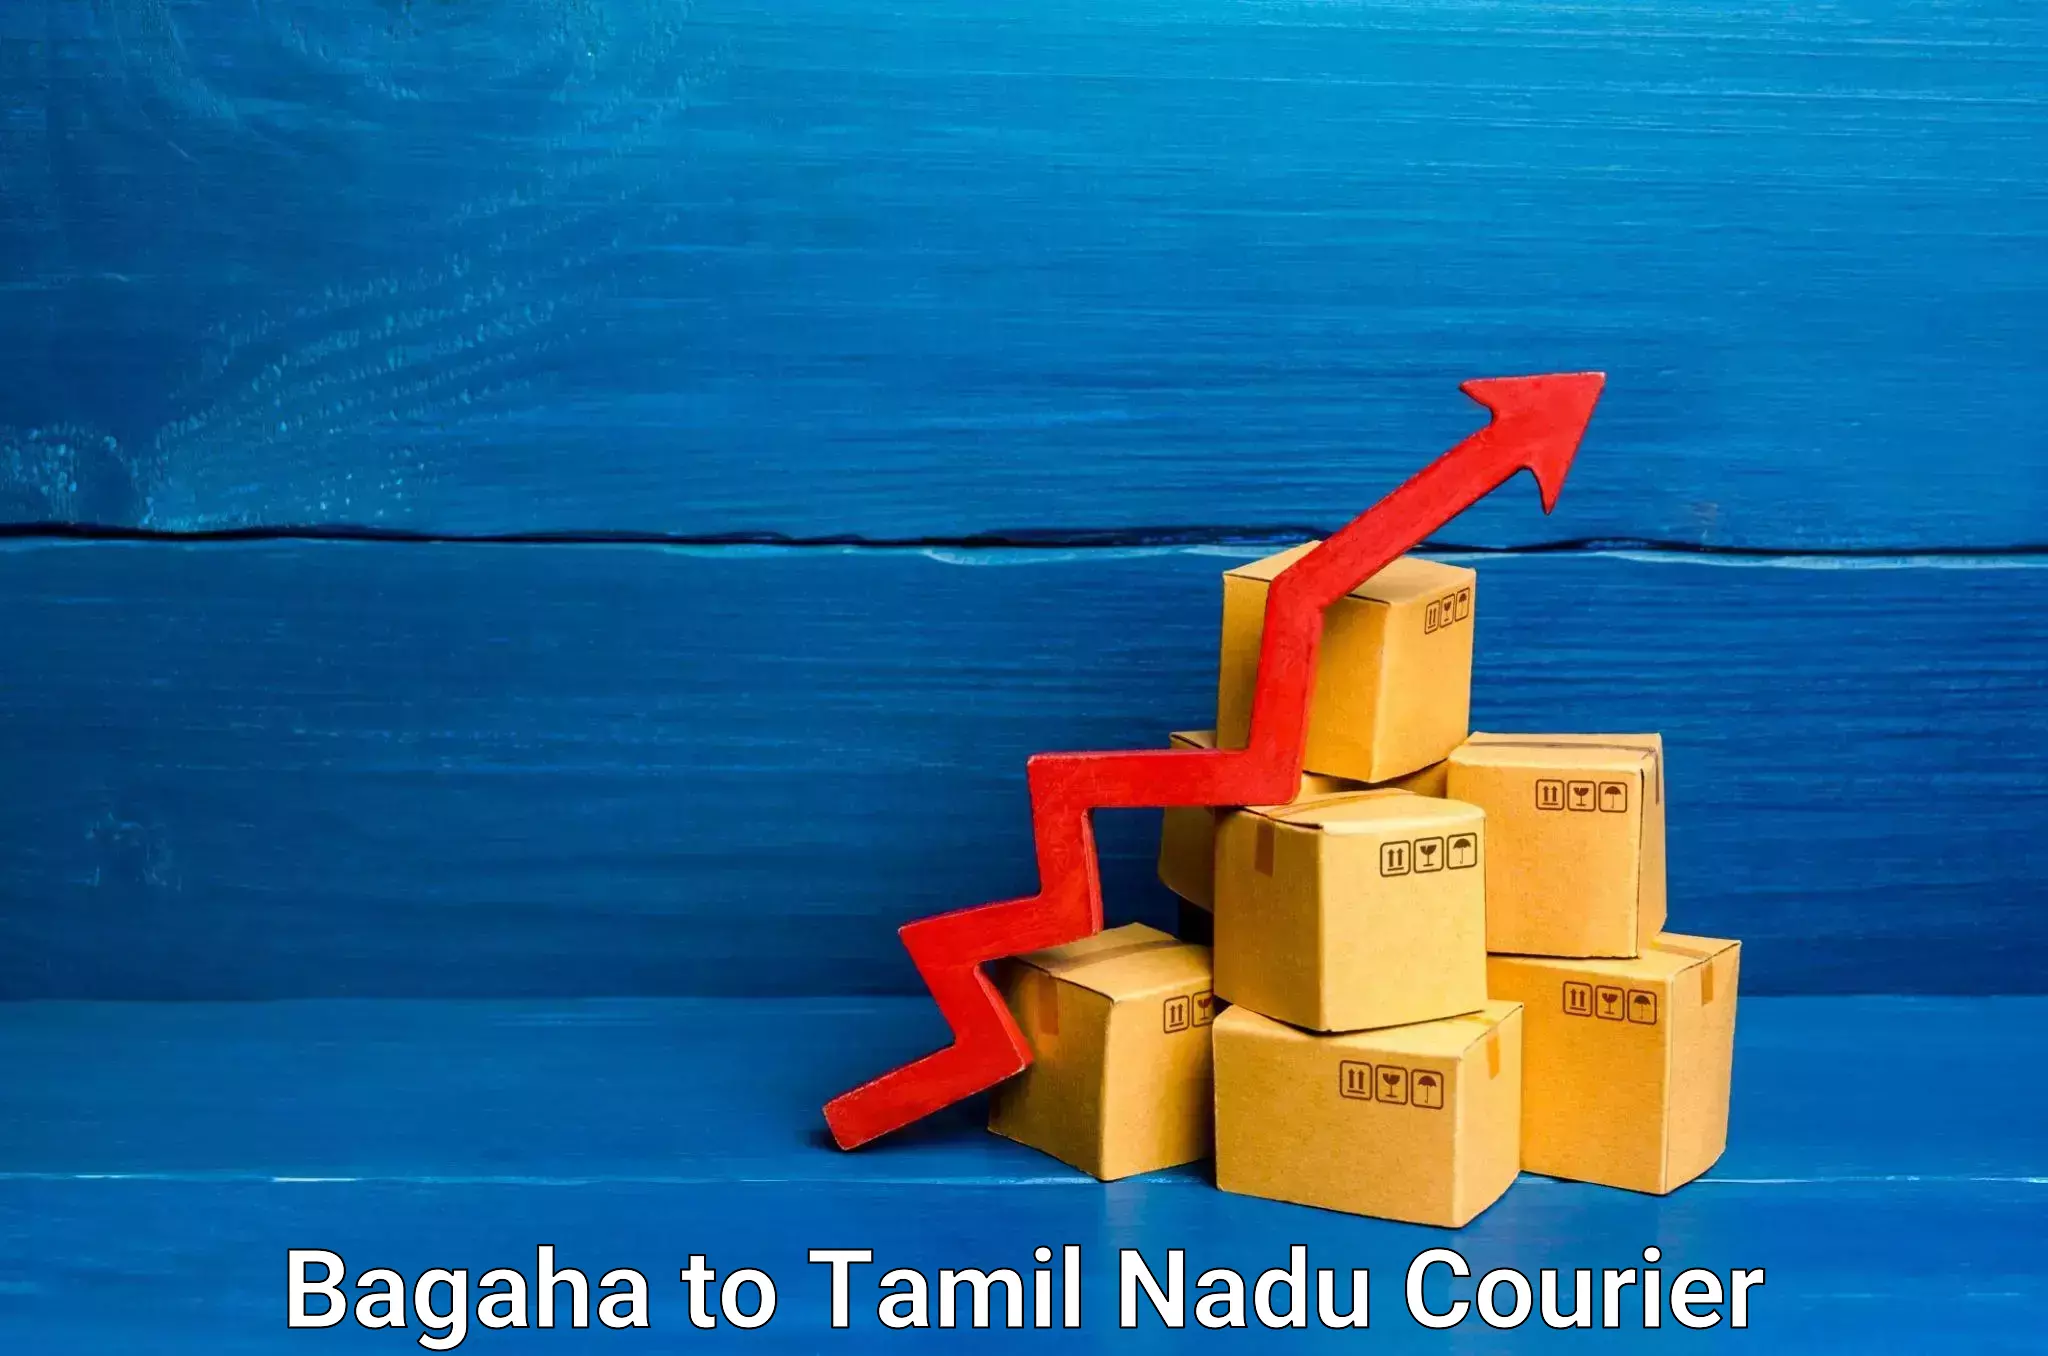 Professional moving company Bagaha to Thiruvadanai